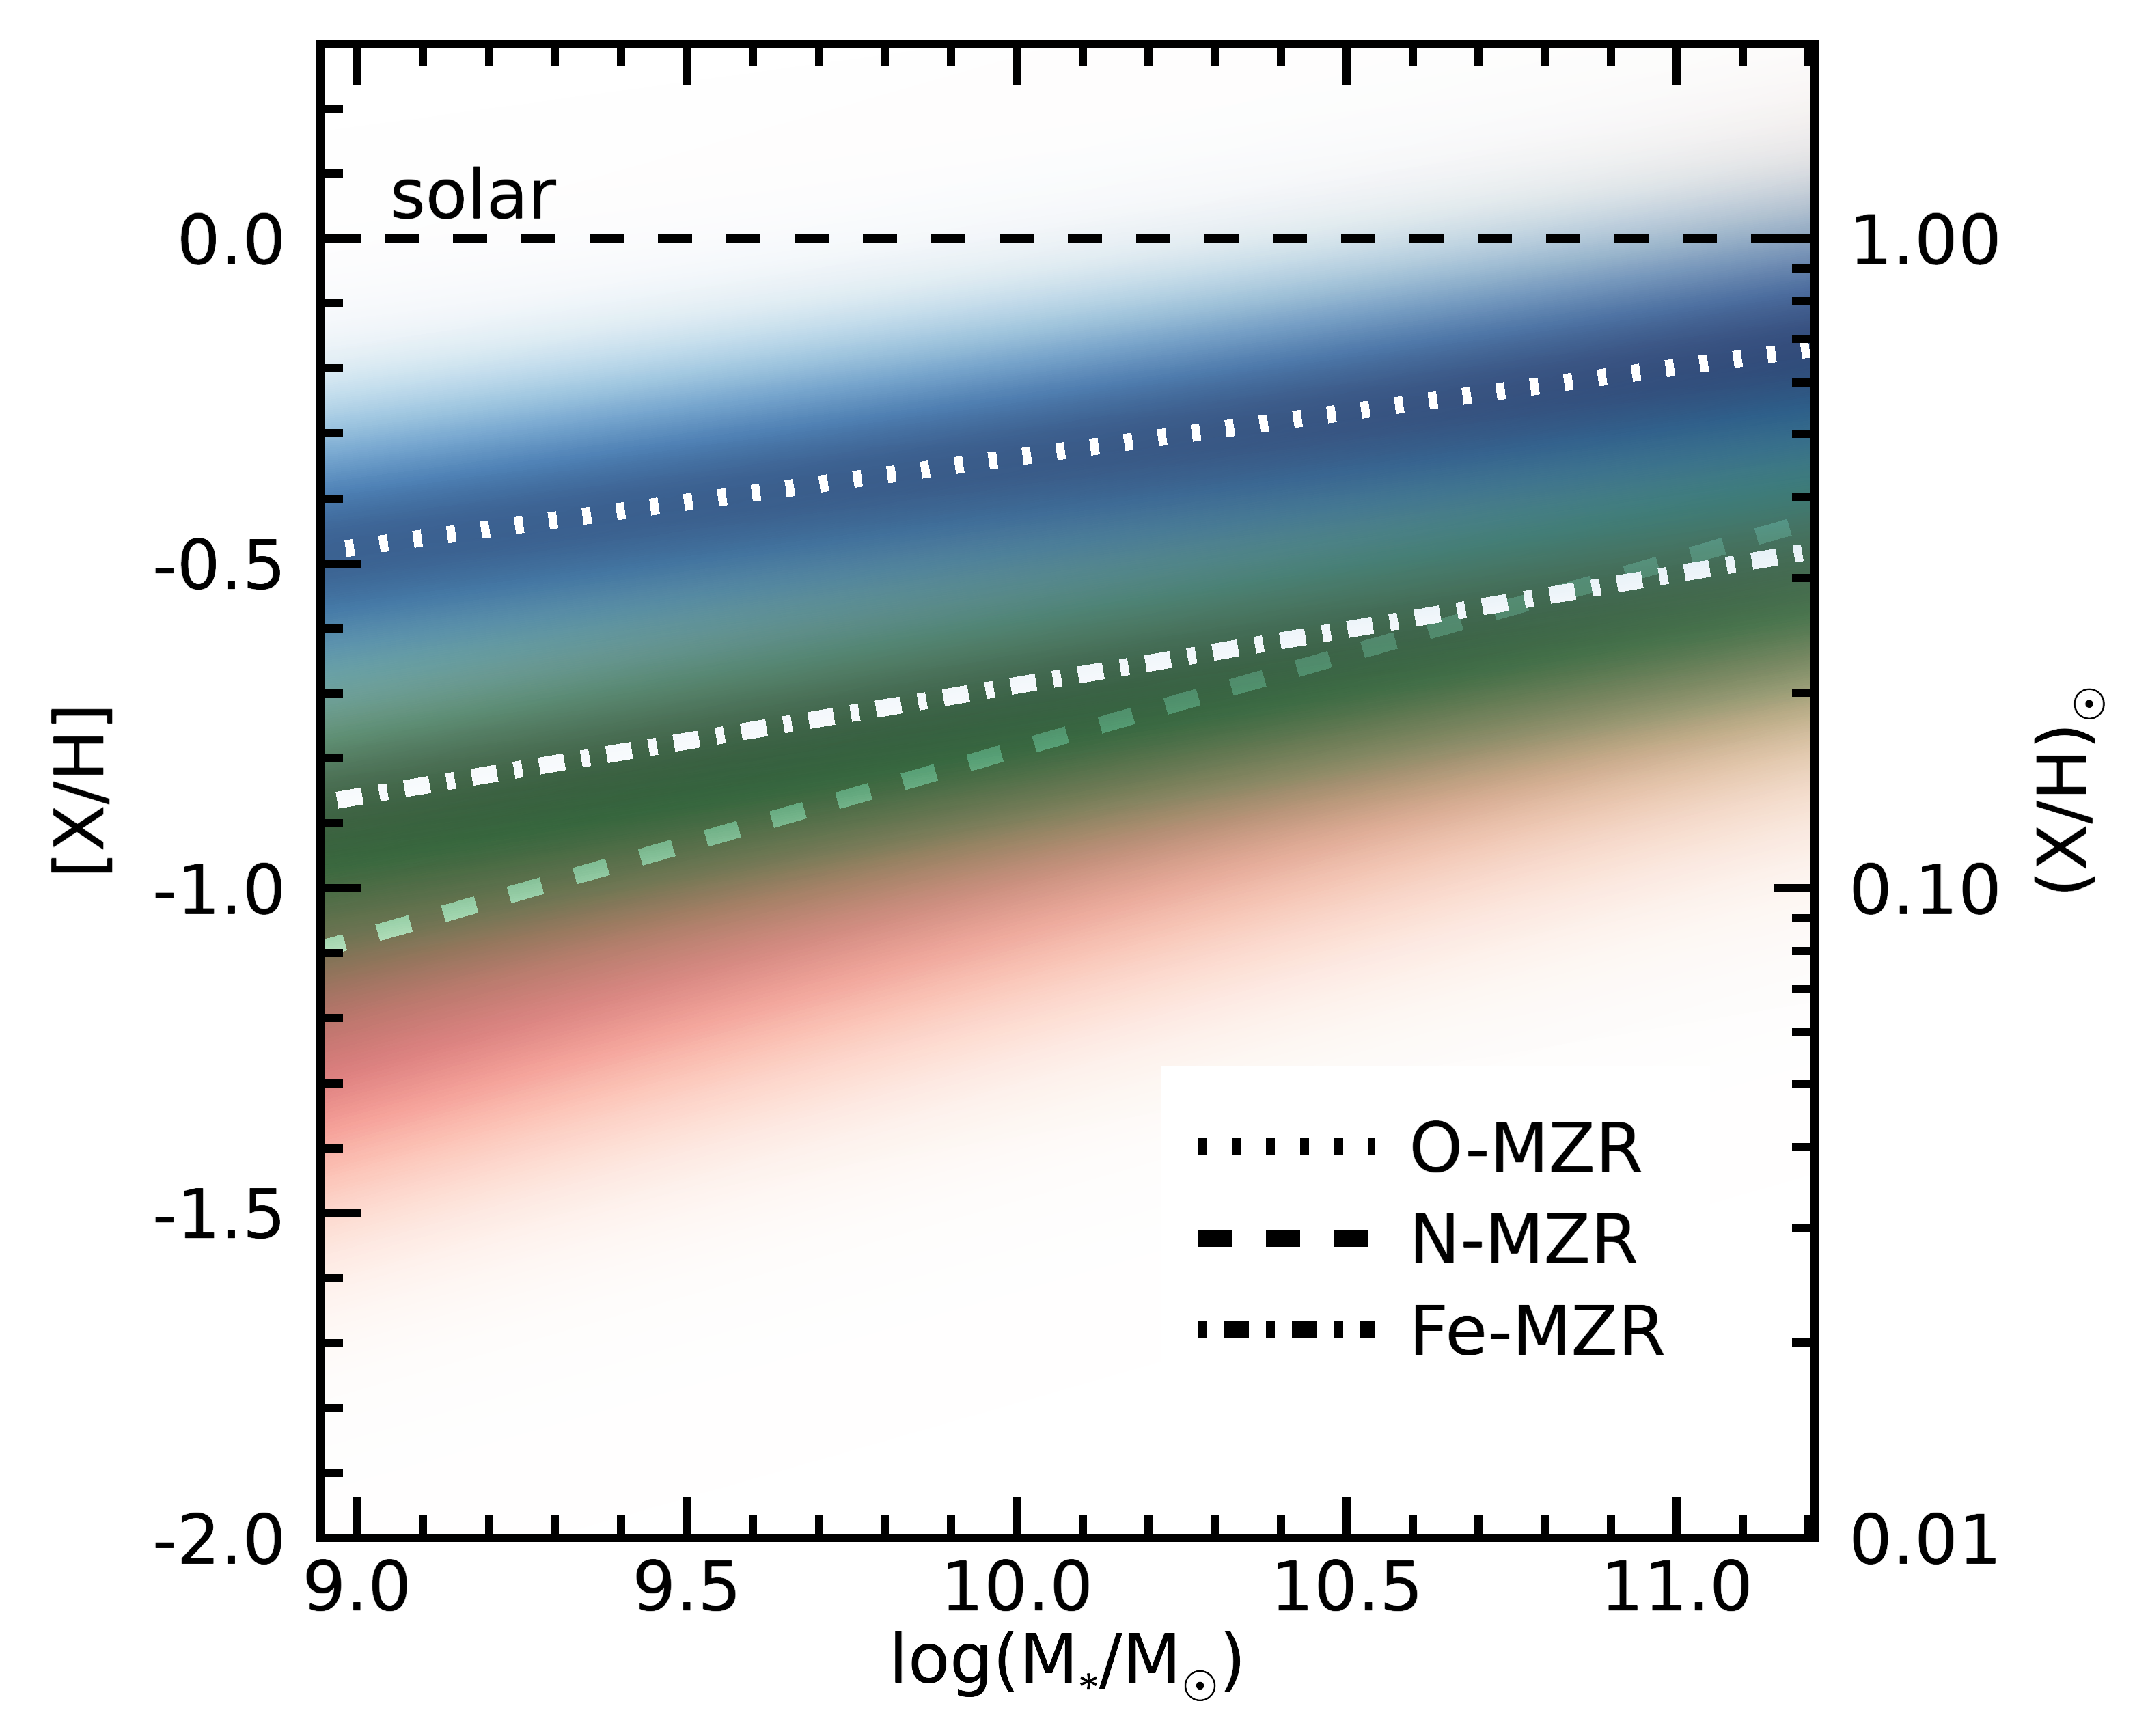 Mass-metallicity relations from Strom et al. (2021)